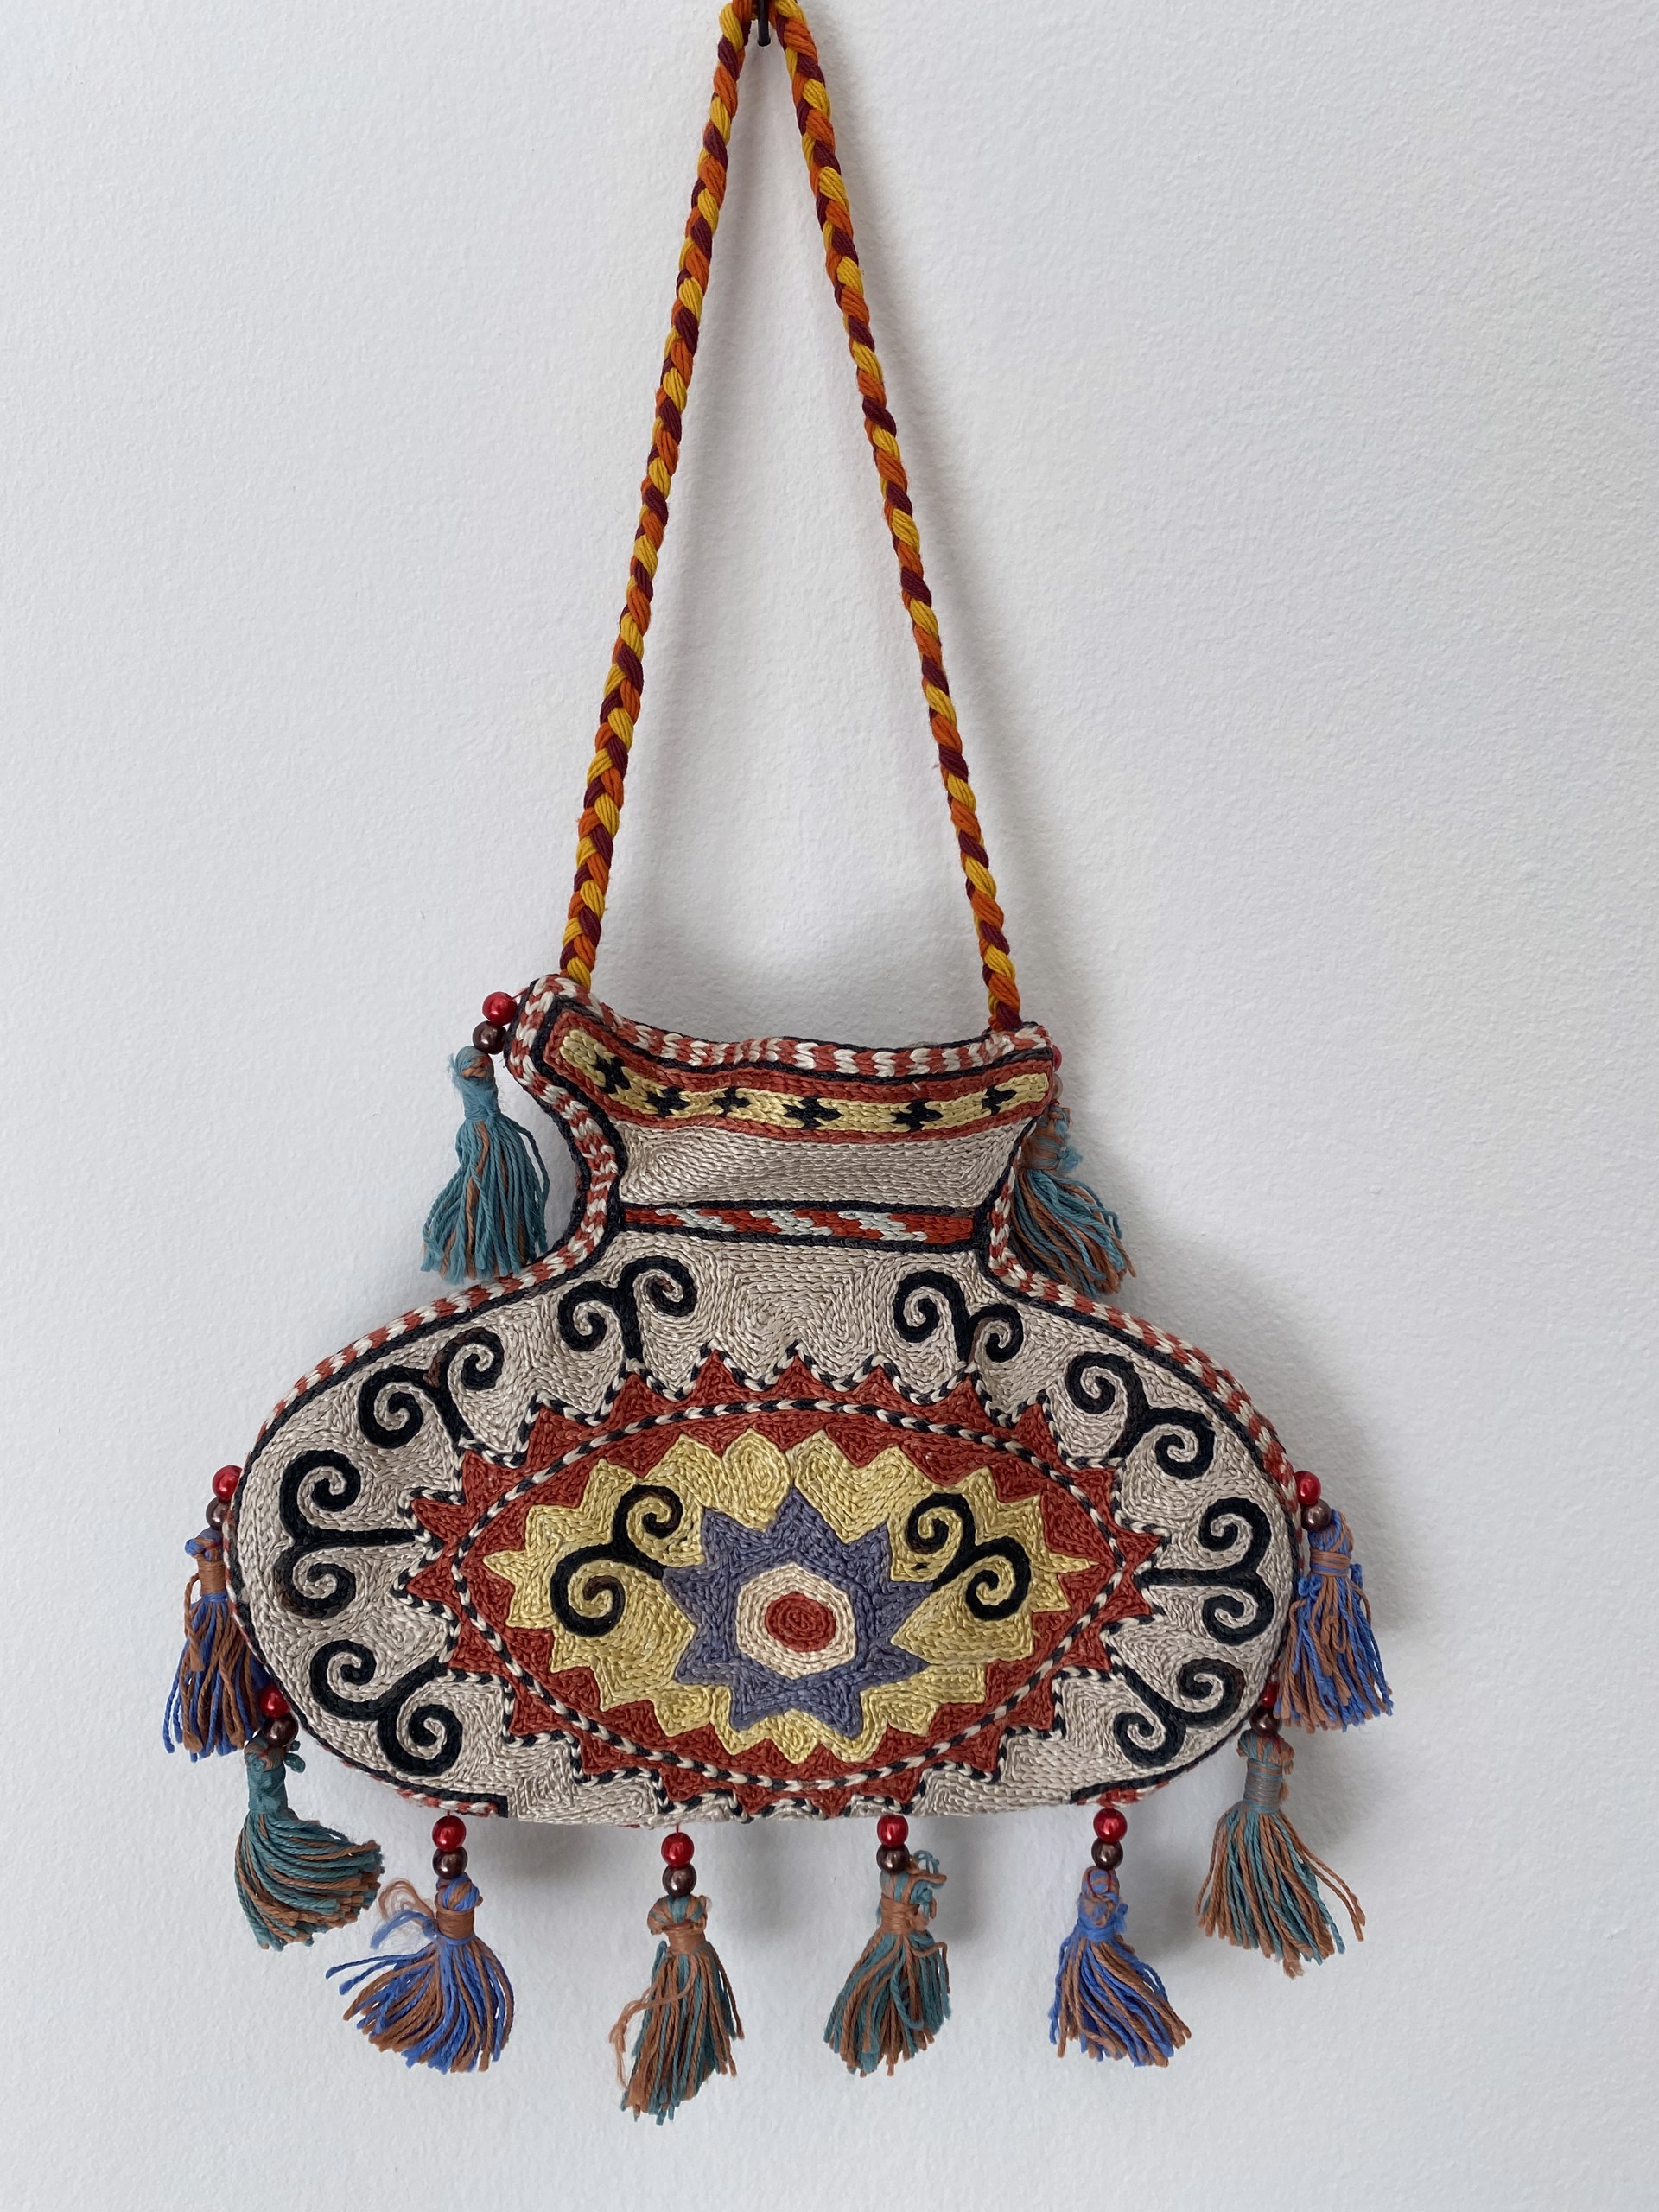 Woven Treasure Bag by Sanjar Nazarov